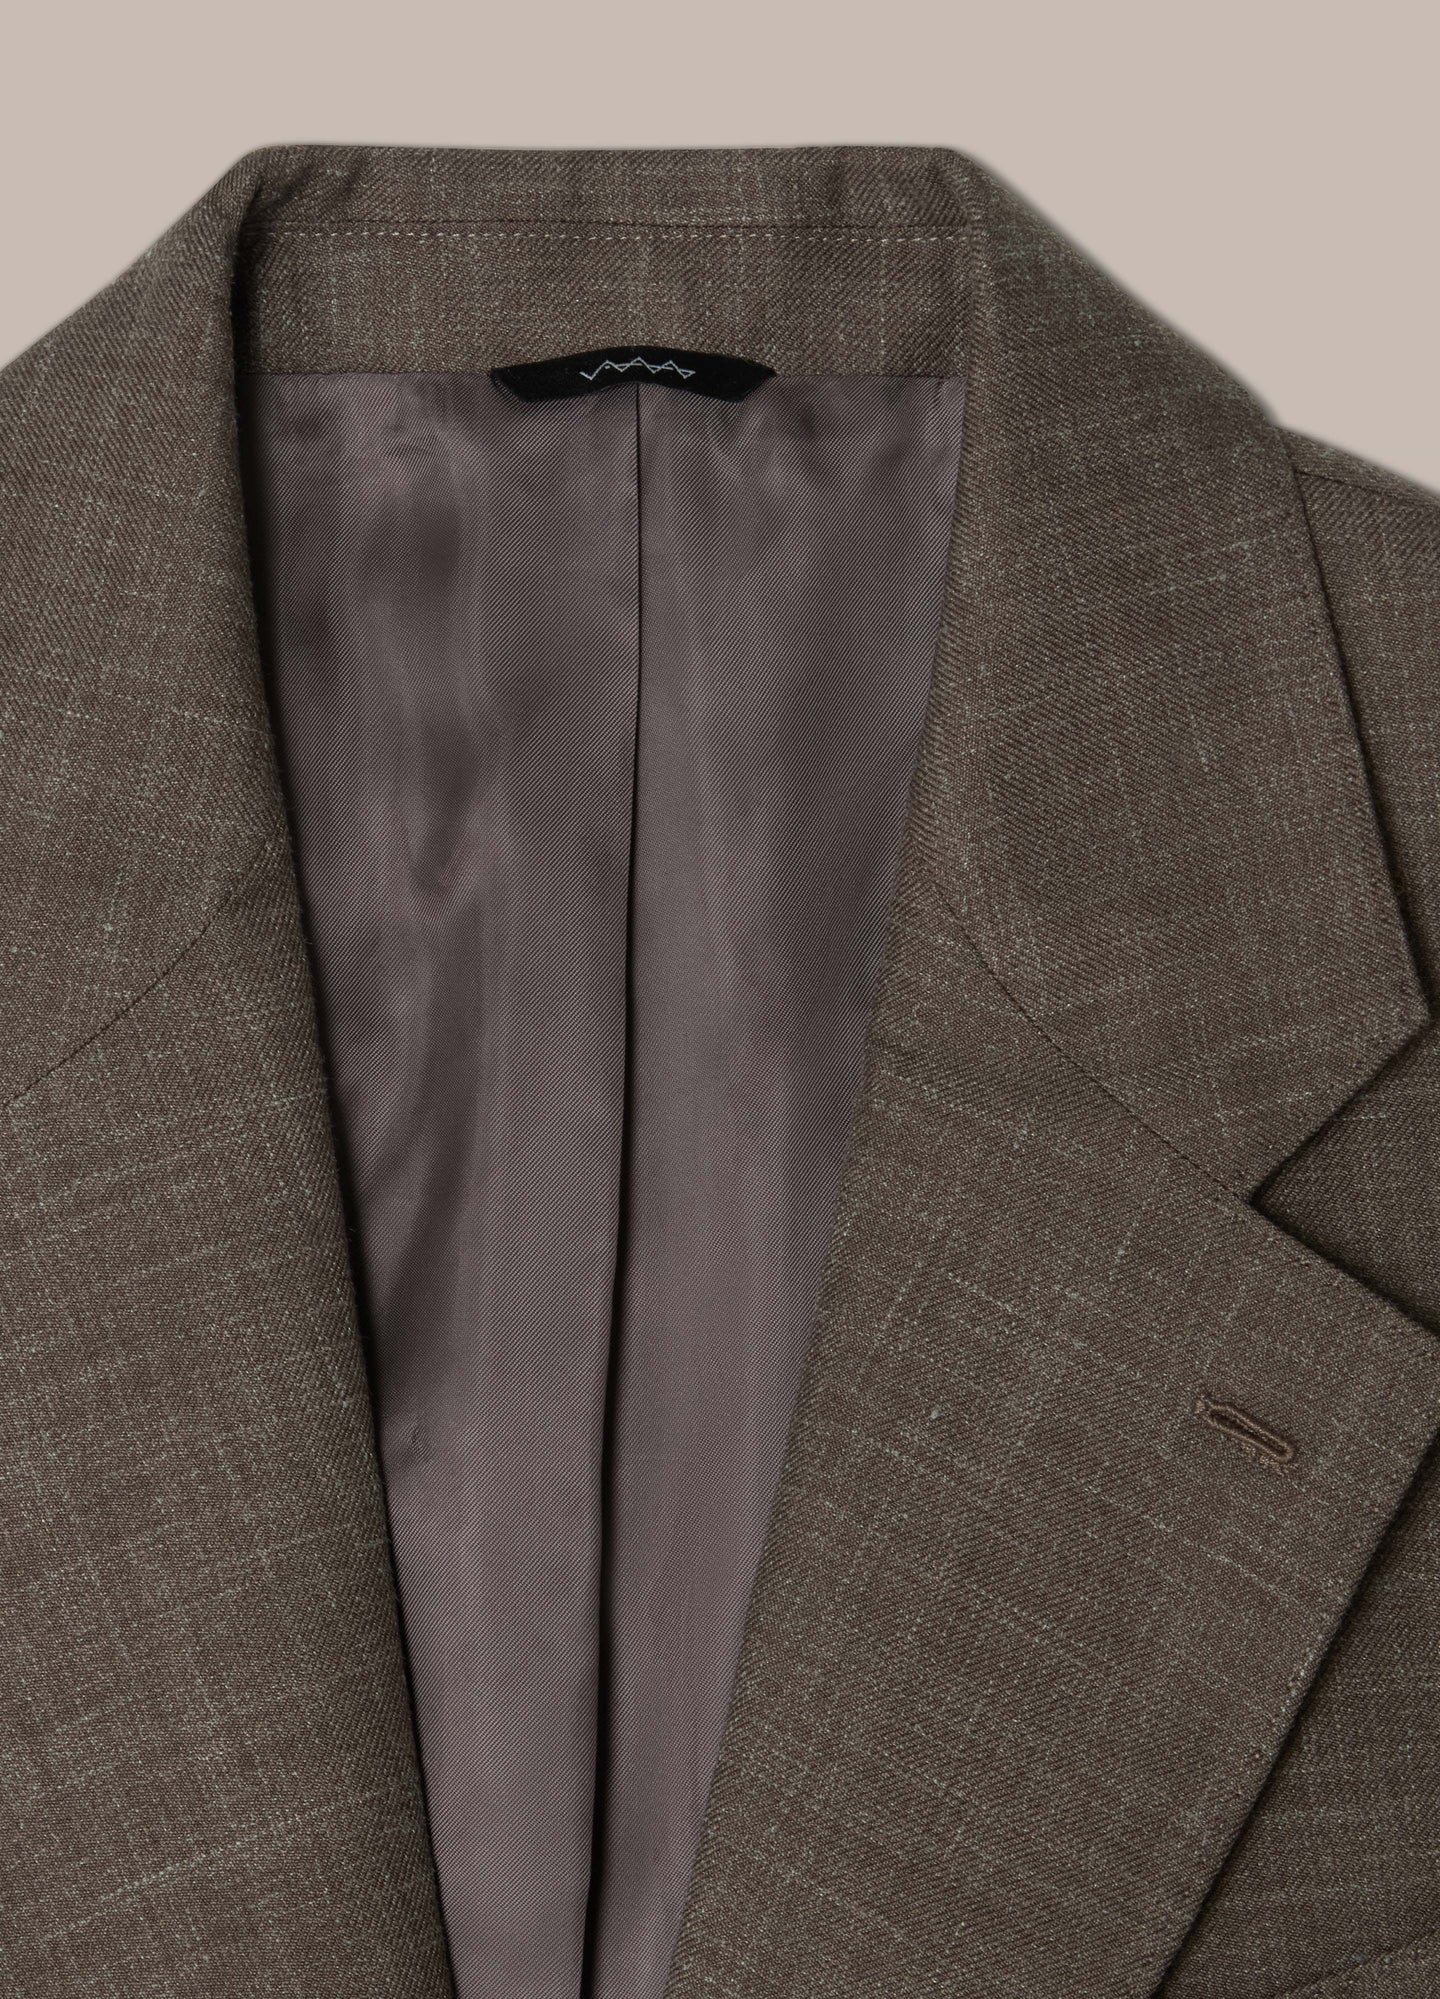 Don Wool/Silk/Linen Suit - Taupe Berg & Berg